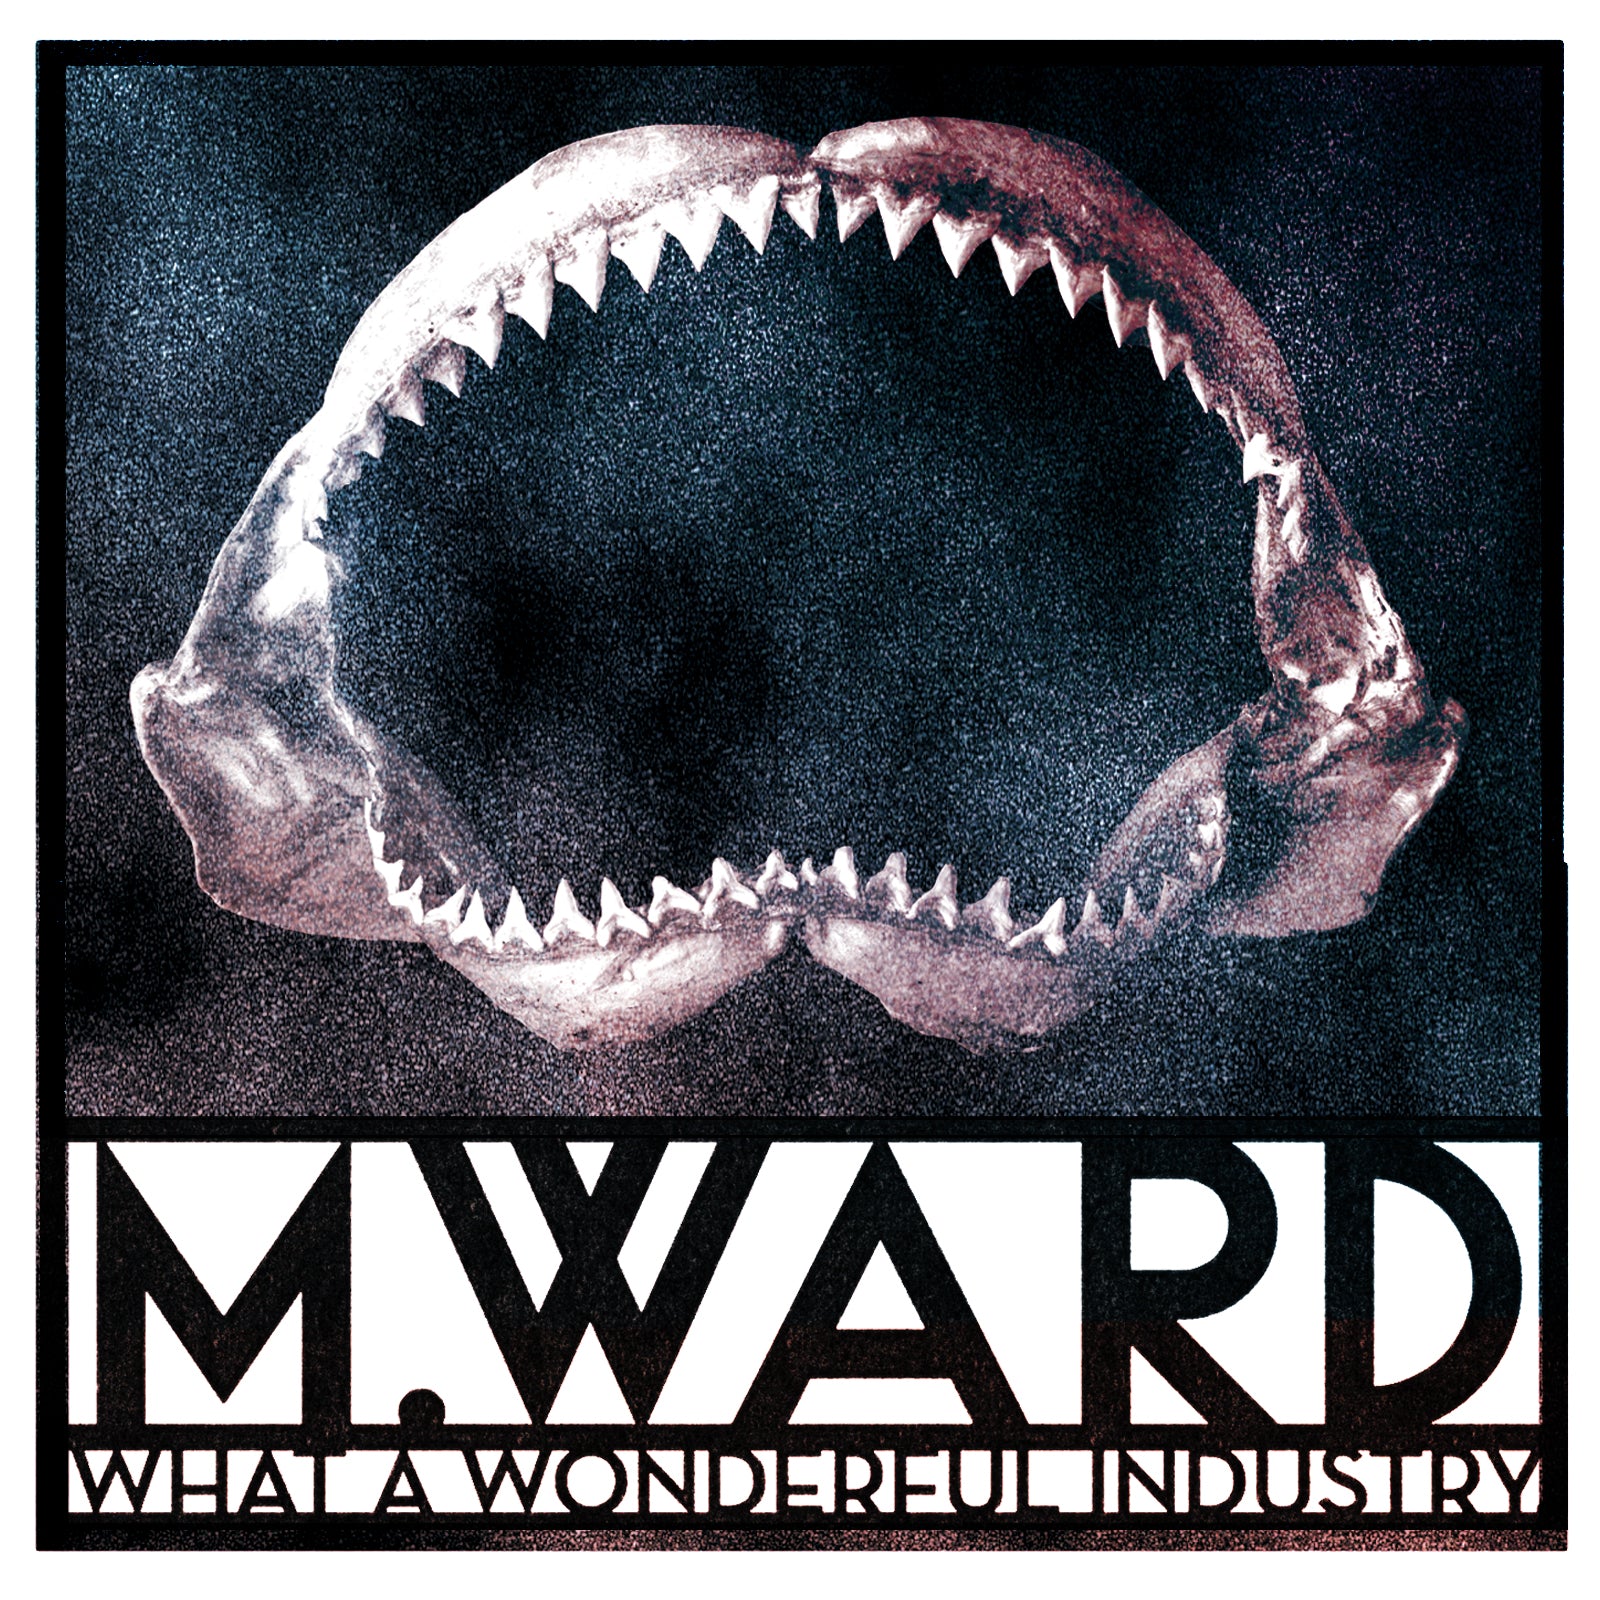 M. WARD "WHAT A WONDERFUL INDUSTRY"